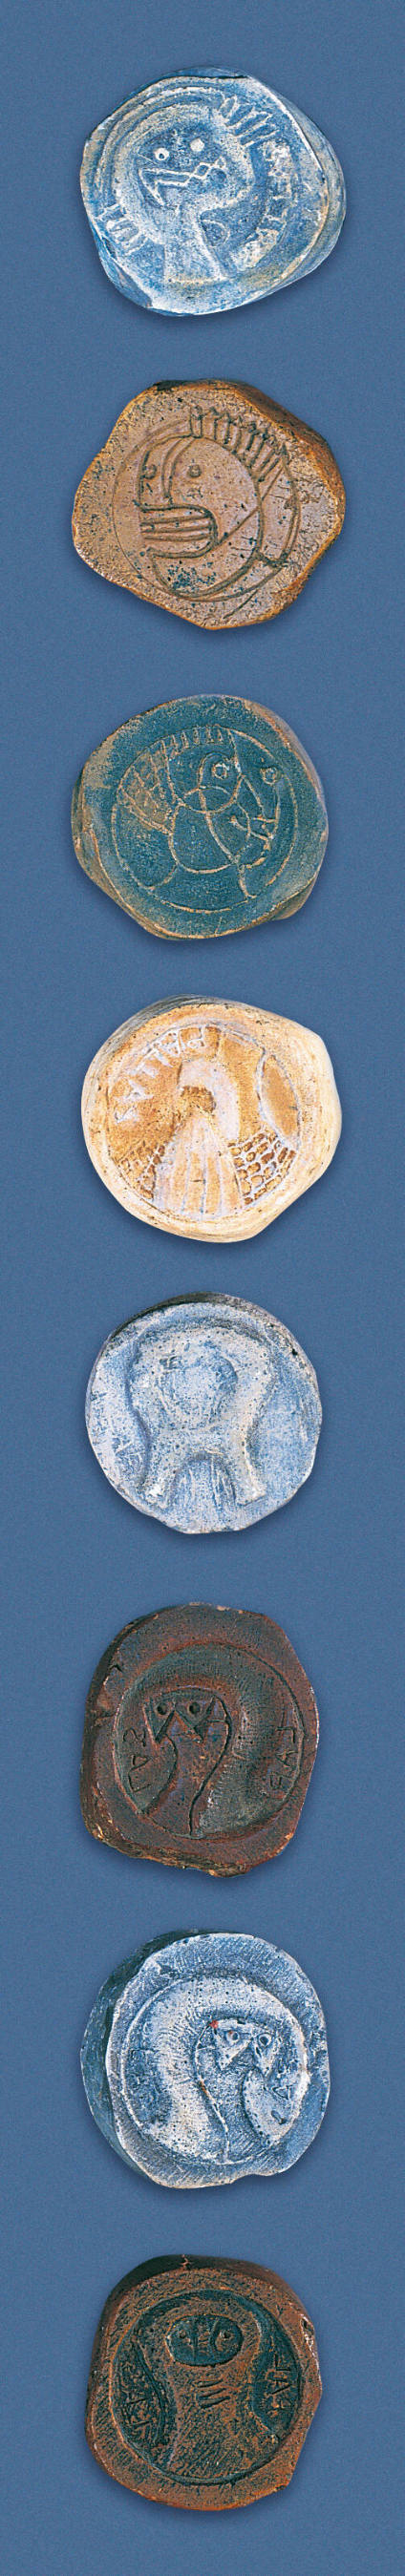 Pallas Athene Seals